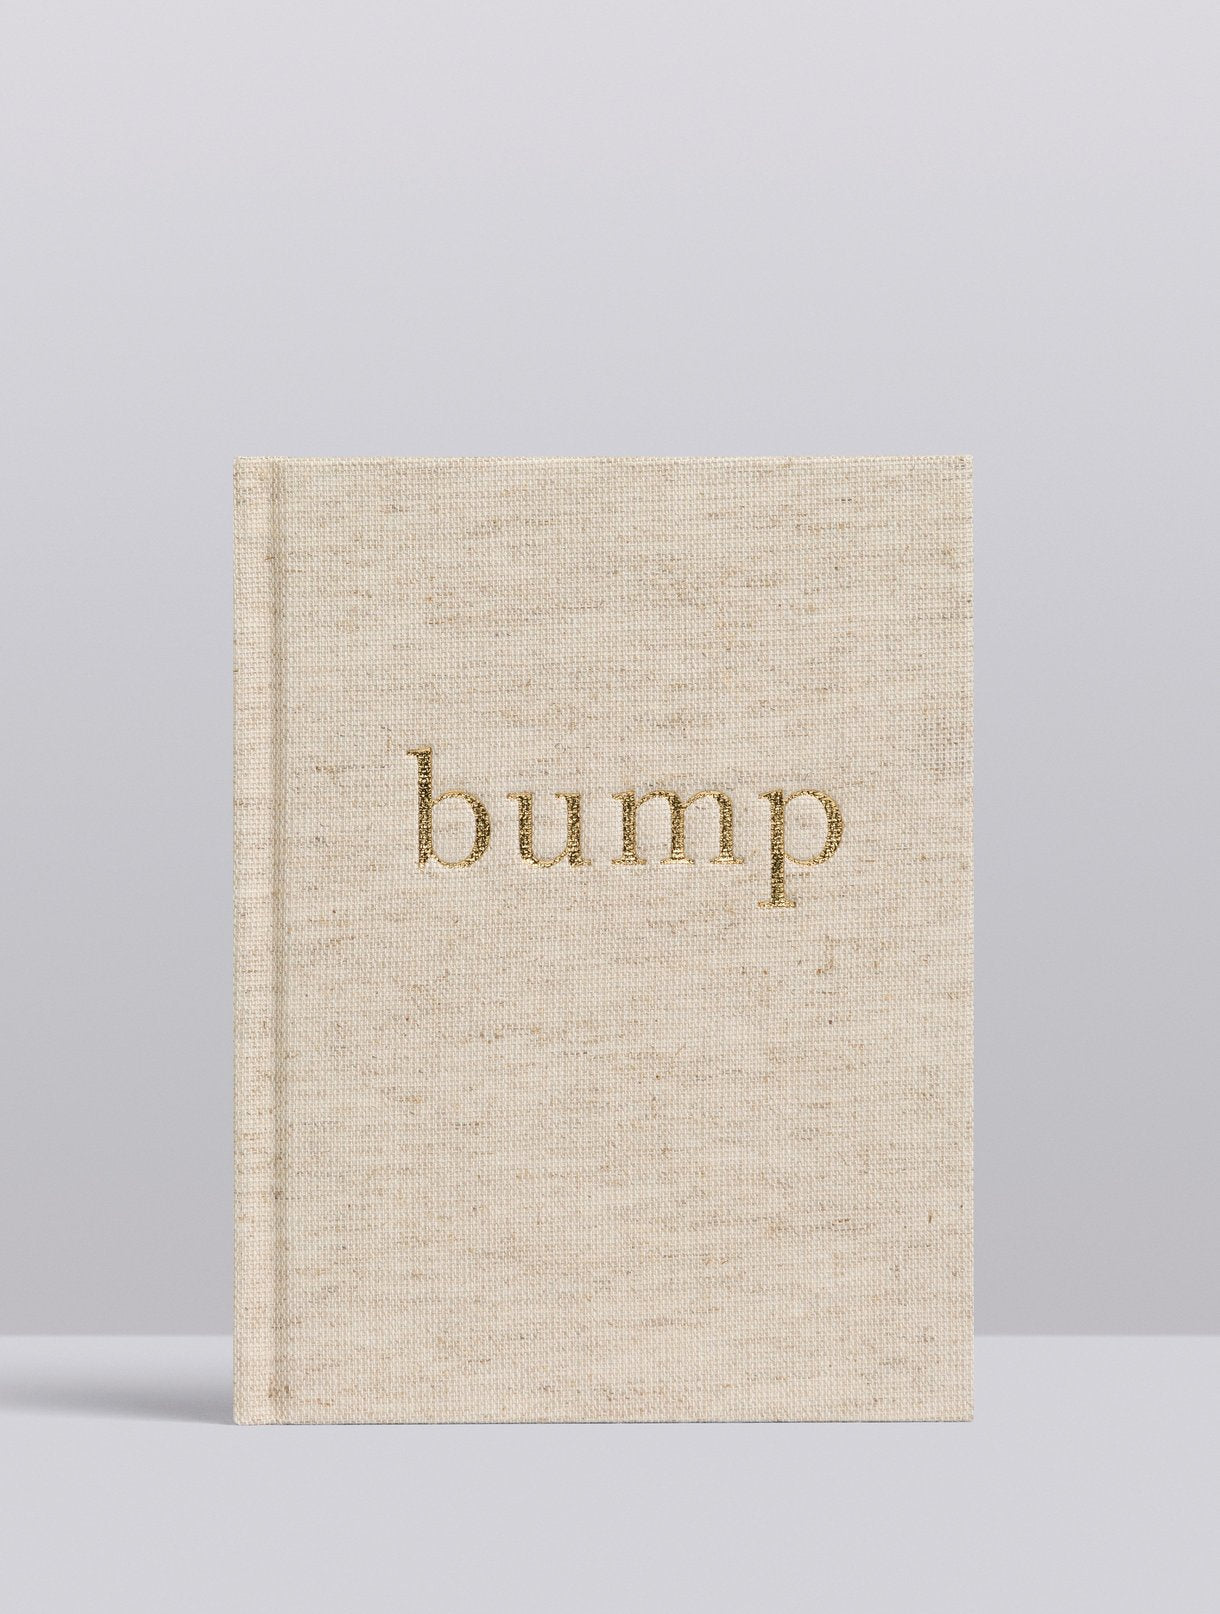 Write To Me - Bump.  A Pregnancy Story - Oatmeal